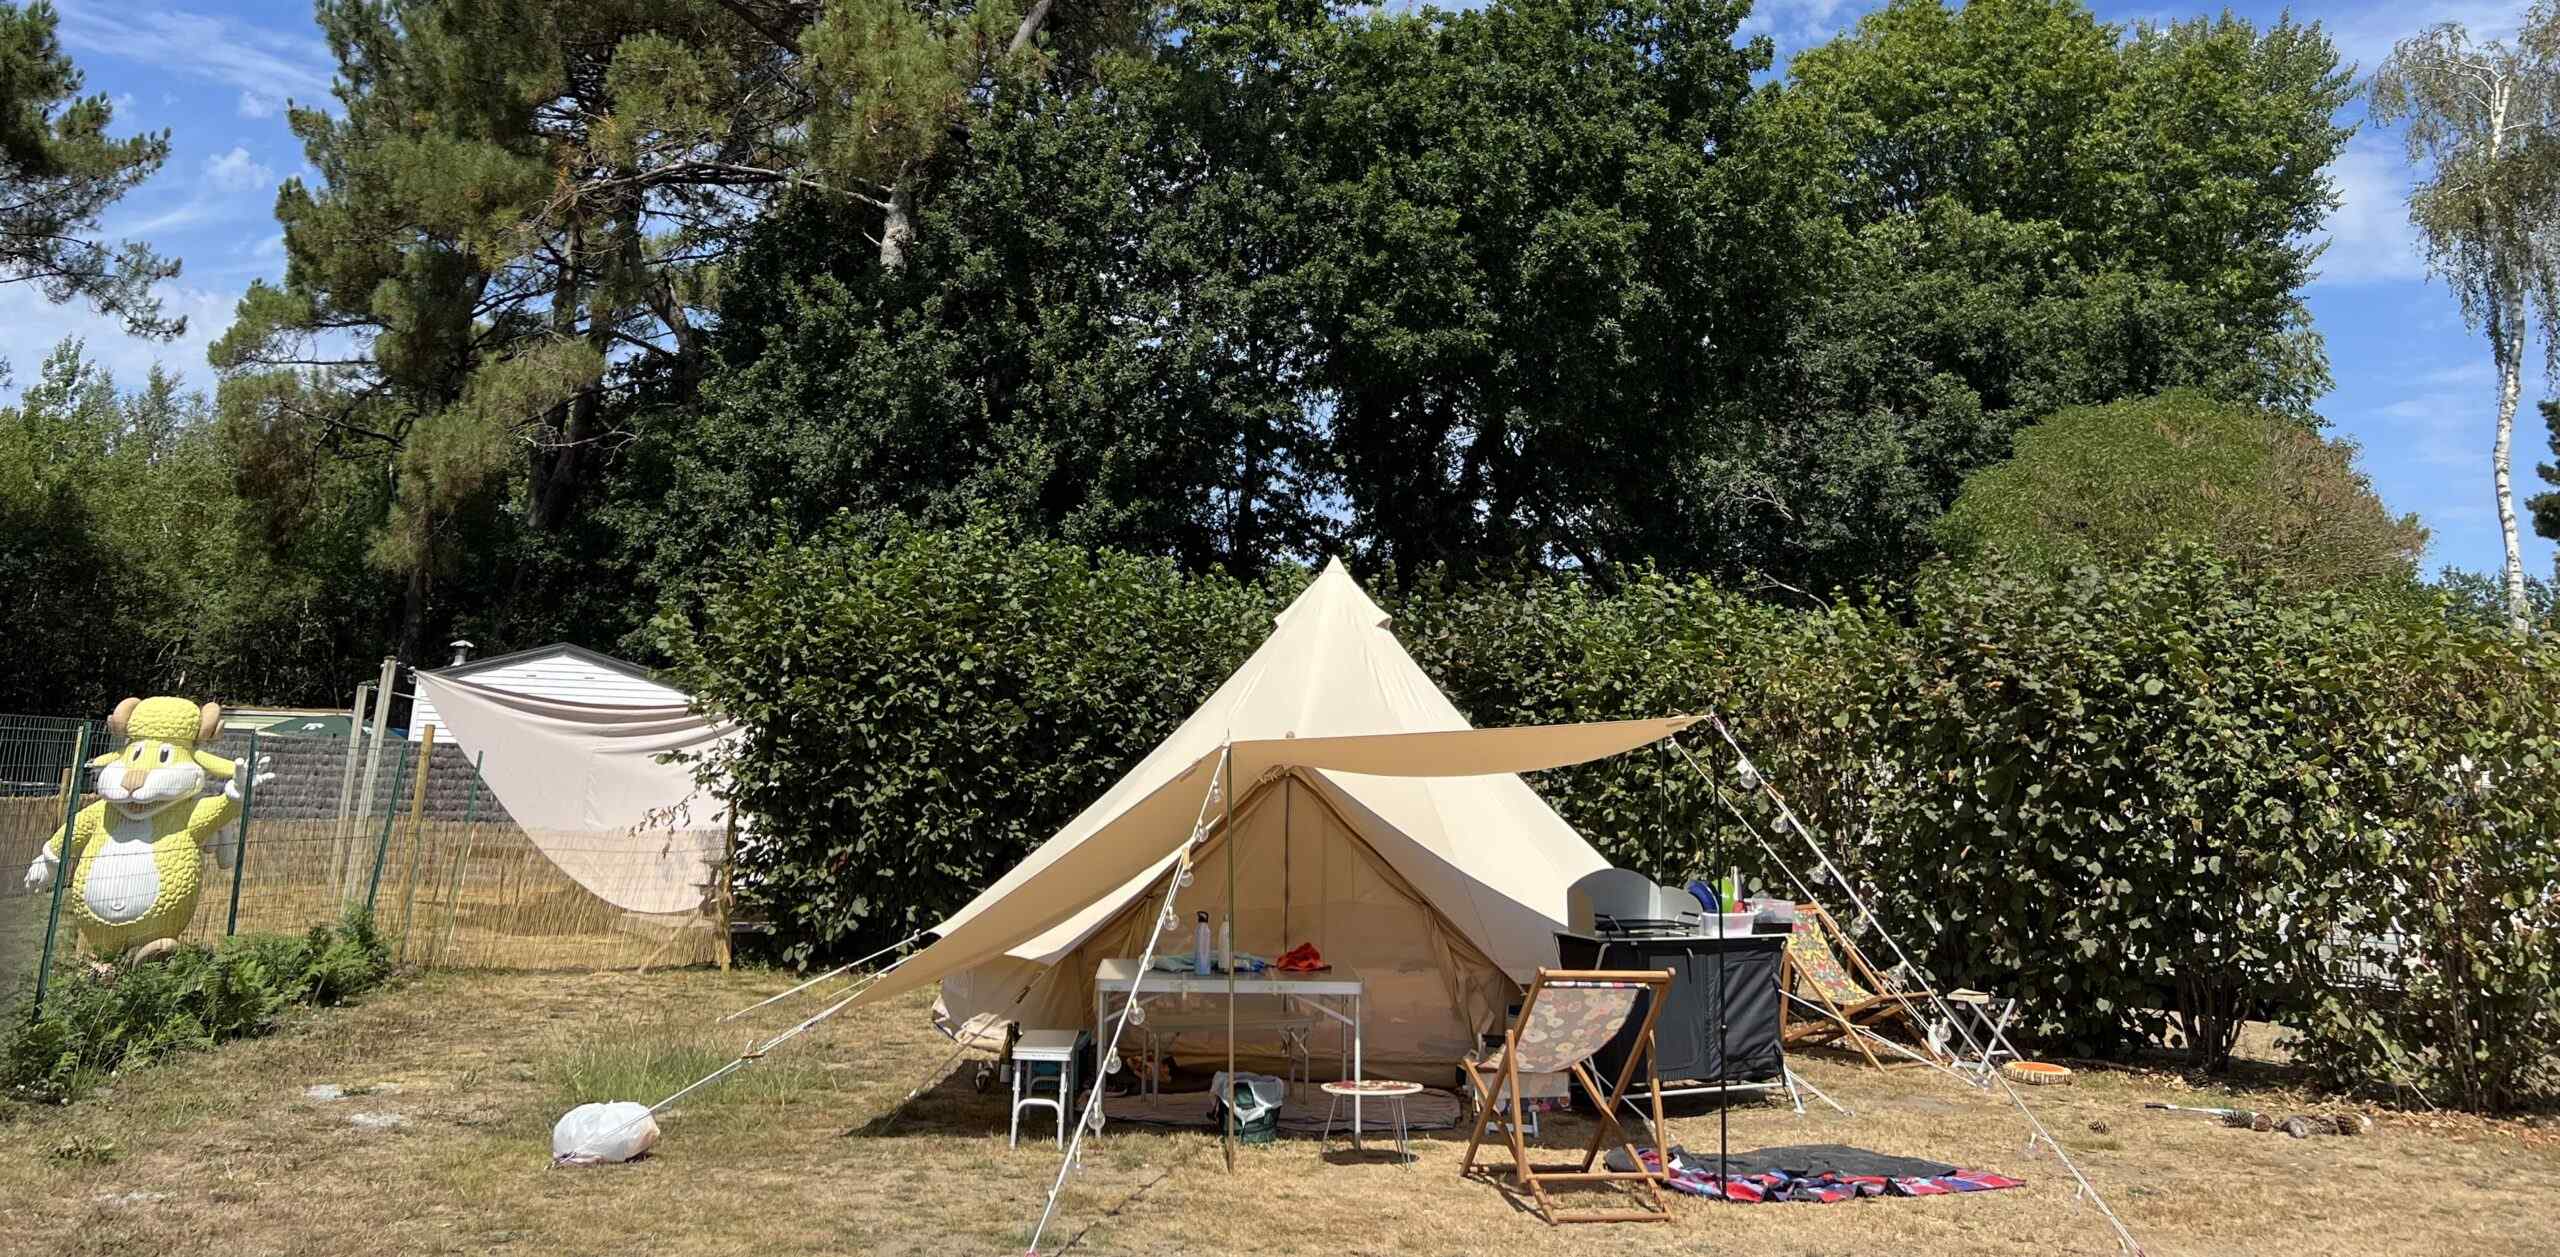 Emplacement de camping - Camping Les Bruyères de Carnac Golfe du Morbihan Bretagne sud France